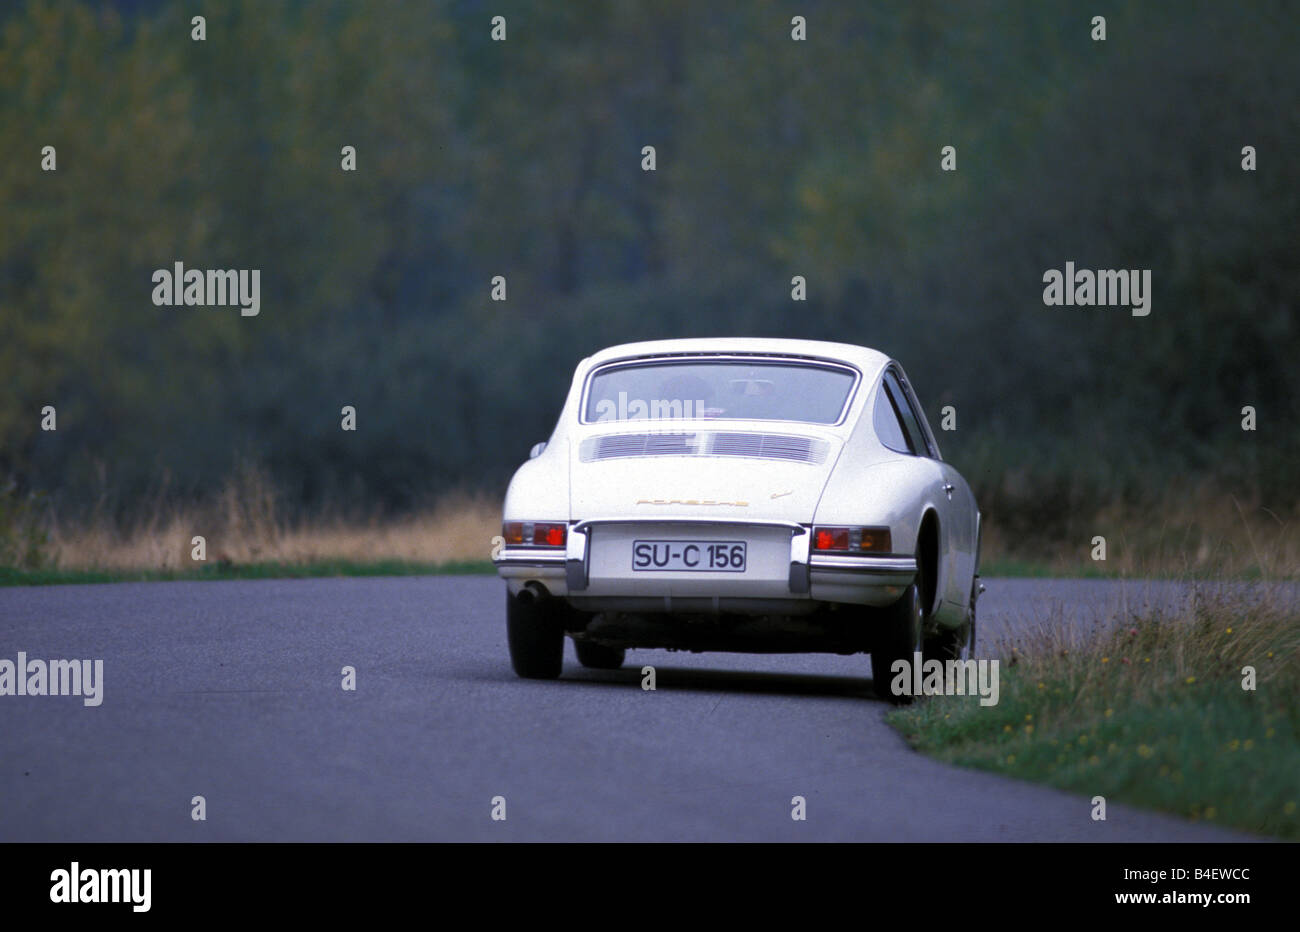 Car, Porsche 911, sports car, Coupé, Coupe, model year 1964, vintage car, 1960s, sixties, white, driving, diagonal back, back vi Stock Photo